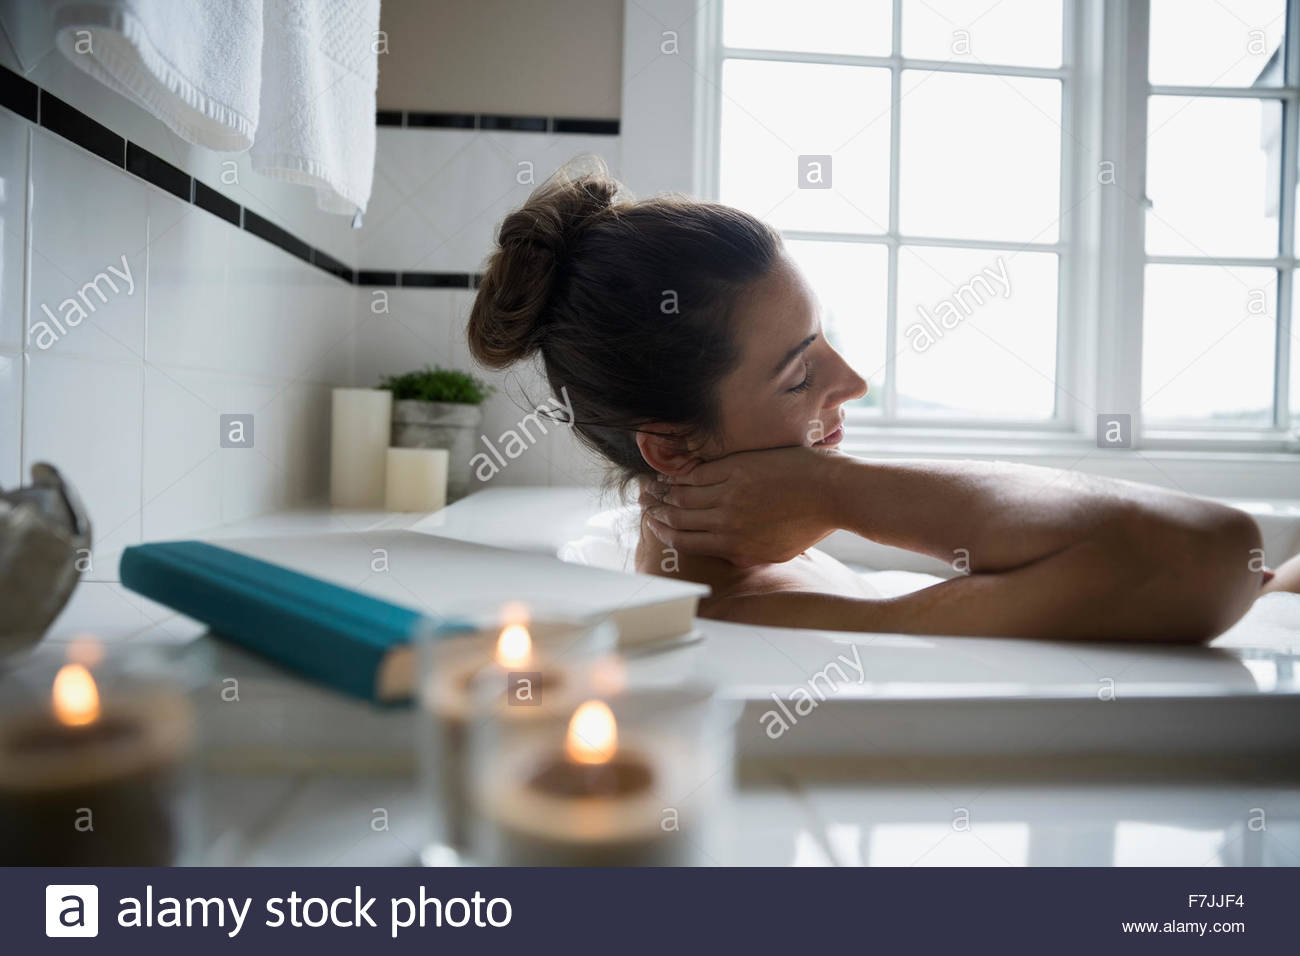 https://c8.alamy.com/comp/F7JJF4/serene-woman-enjoying-candlelight-bath-F7JJF4.jpg